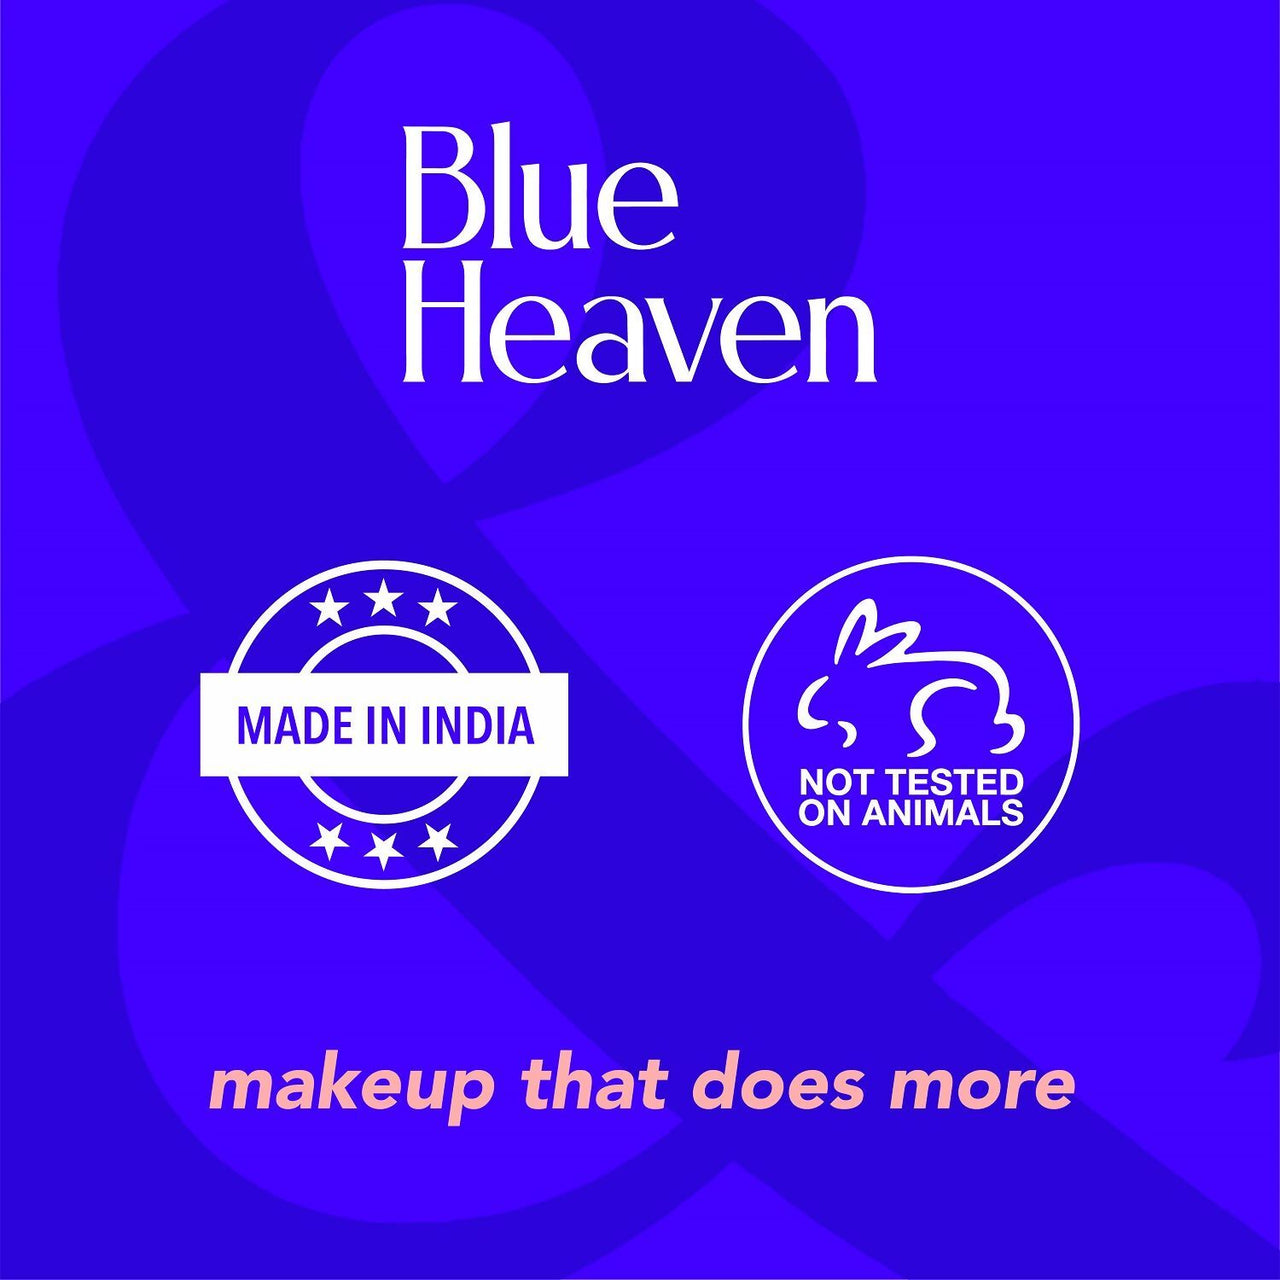 Blue Heaven Pop & Glow Cheek & Eye Bloom Blush - Pink Tease - Distacart